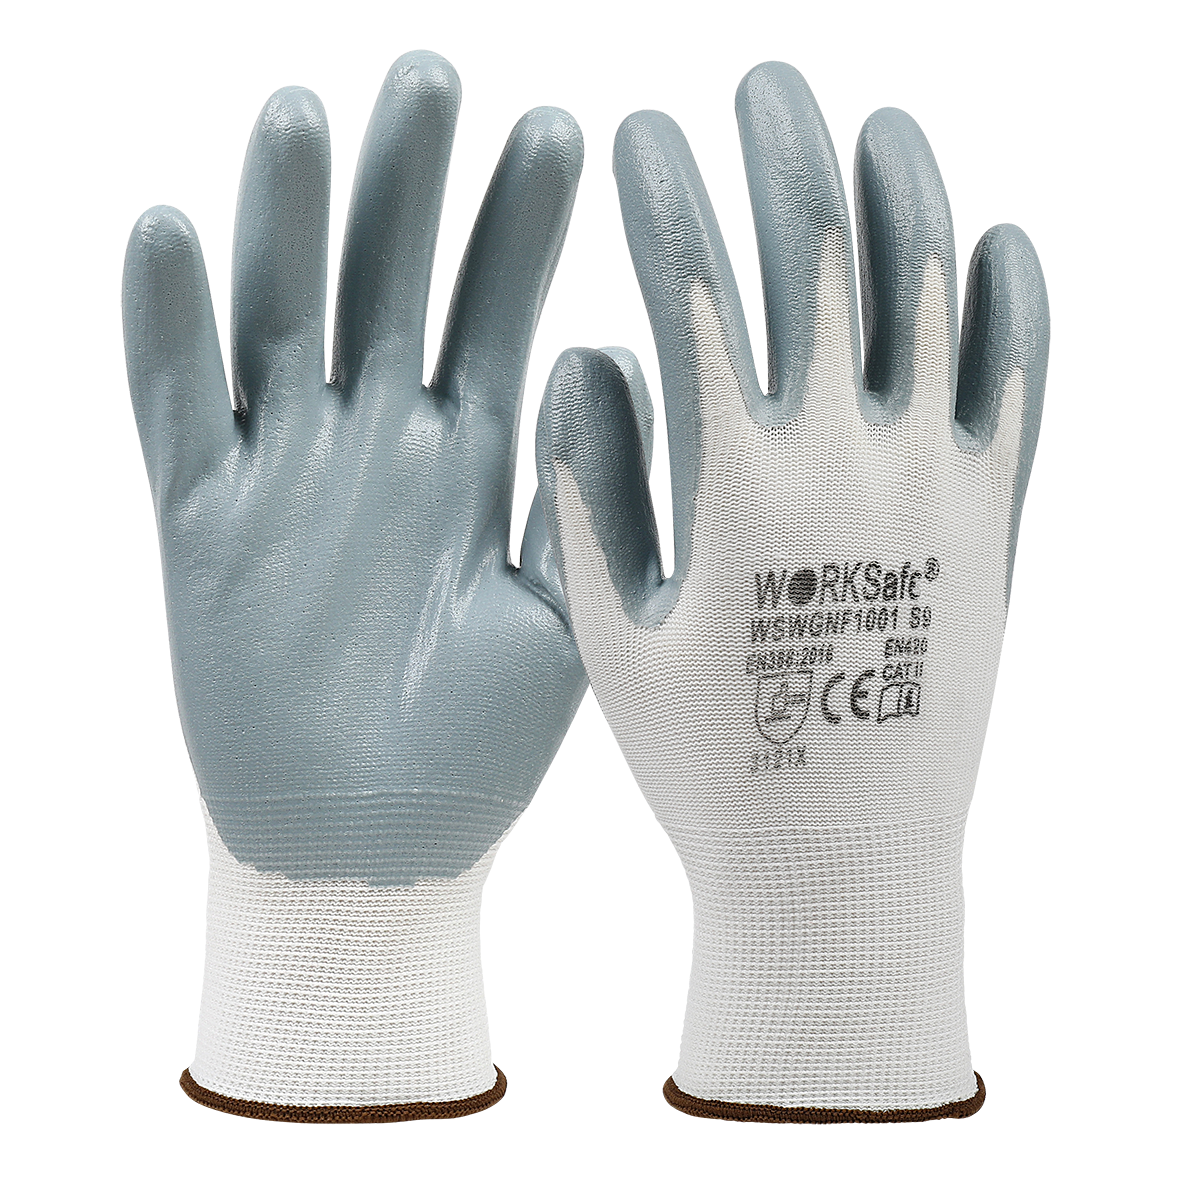 Medium Safety Works WA9182A Gray Brahma Seamless Micro-Foam Glove, Nitrile Coated